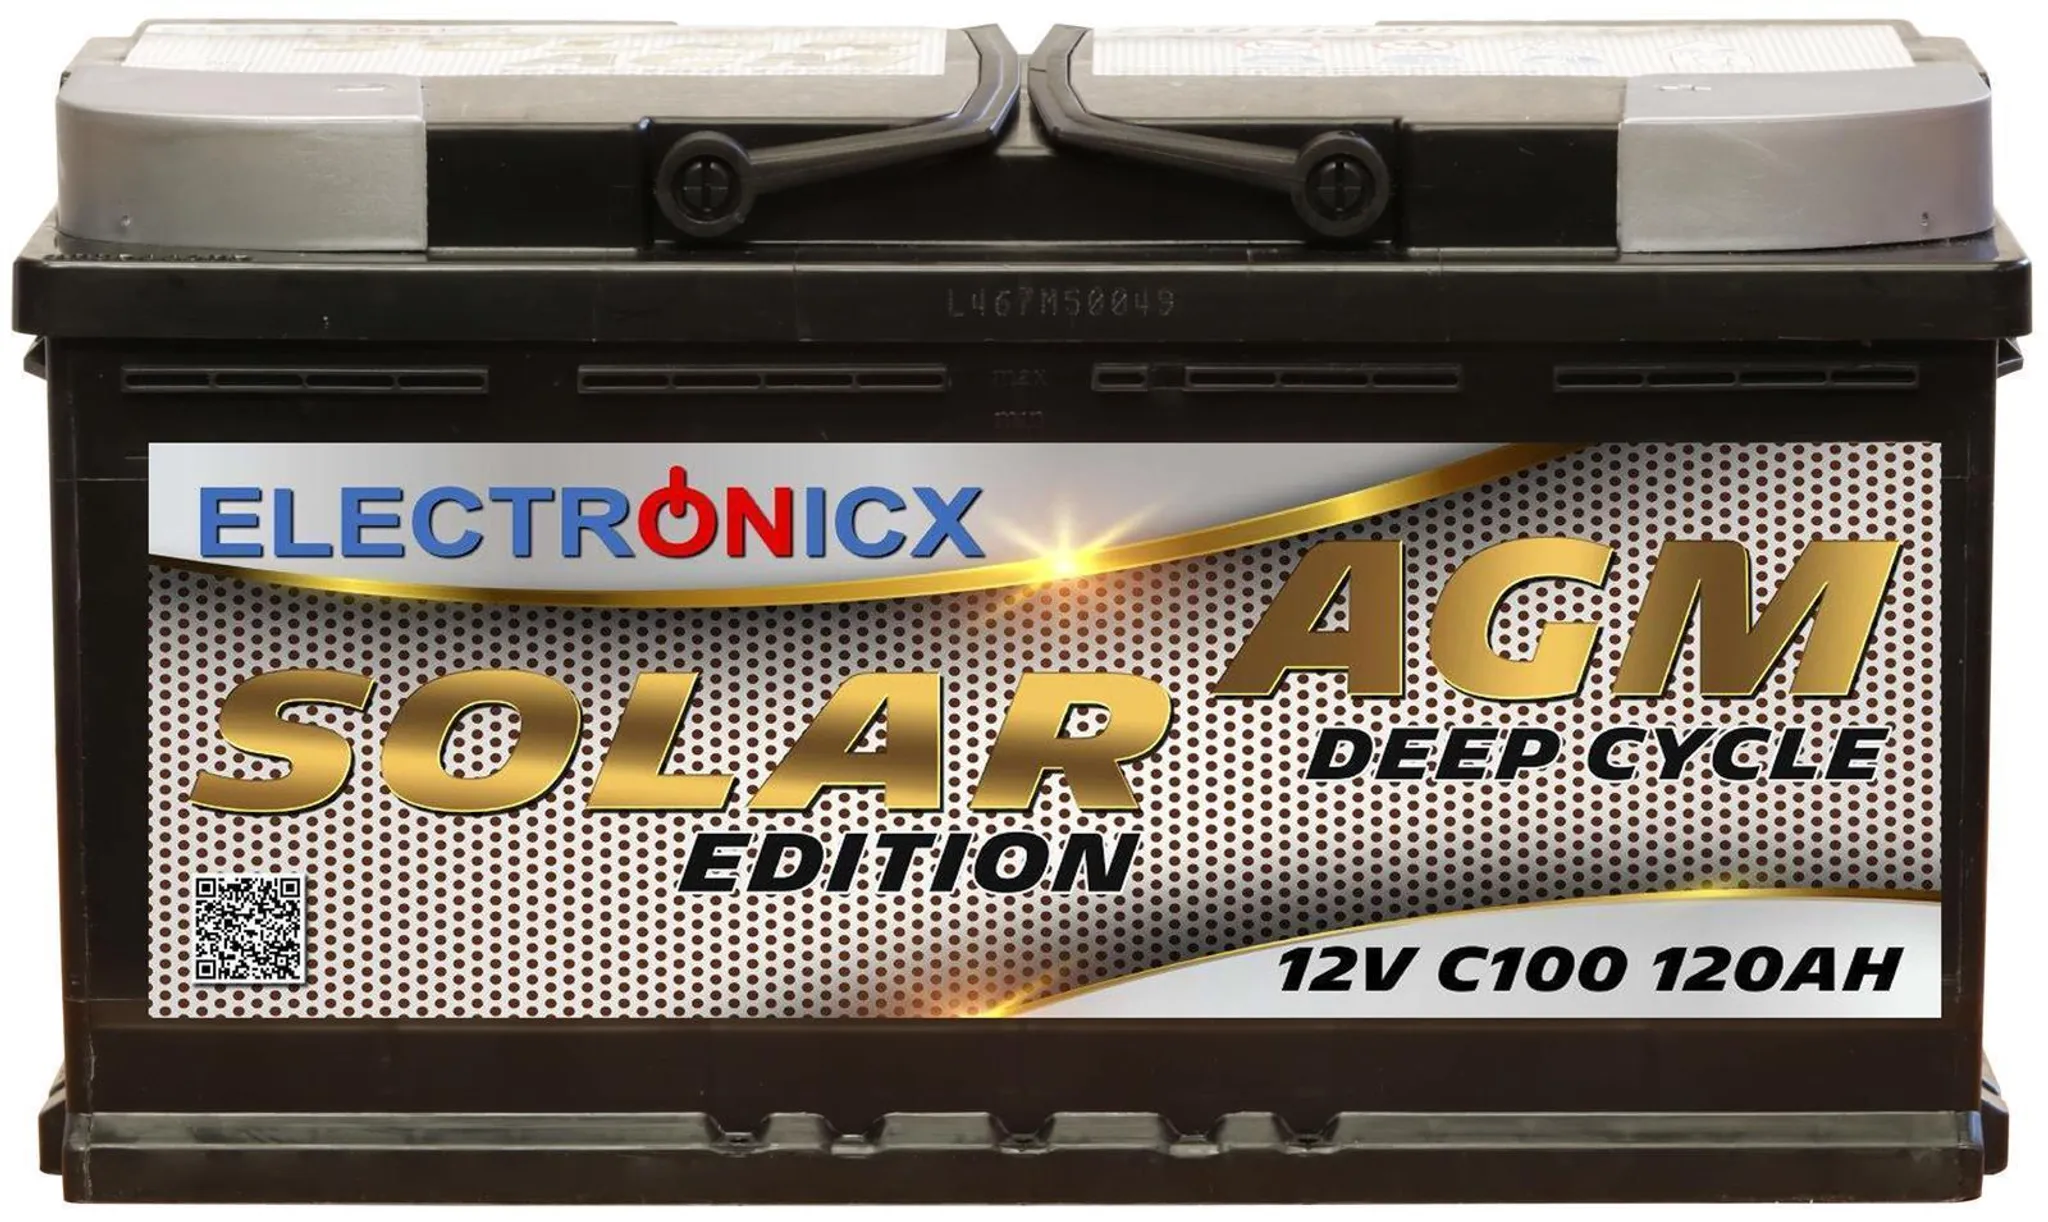 Electronicx Caravan Edition Gel Batterie 140 AH 12V, 189,99 €